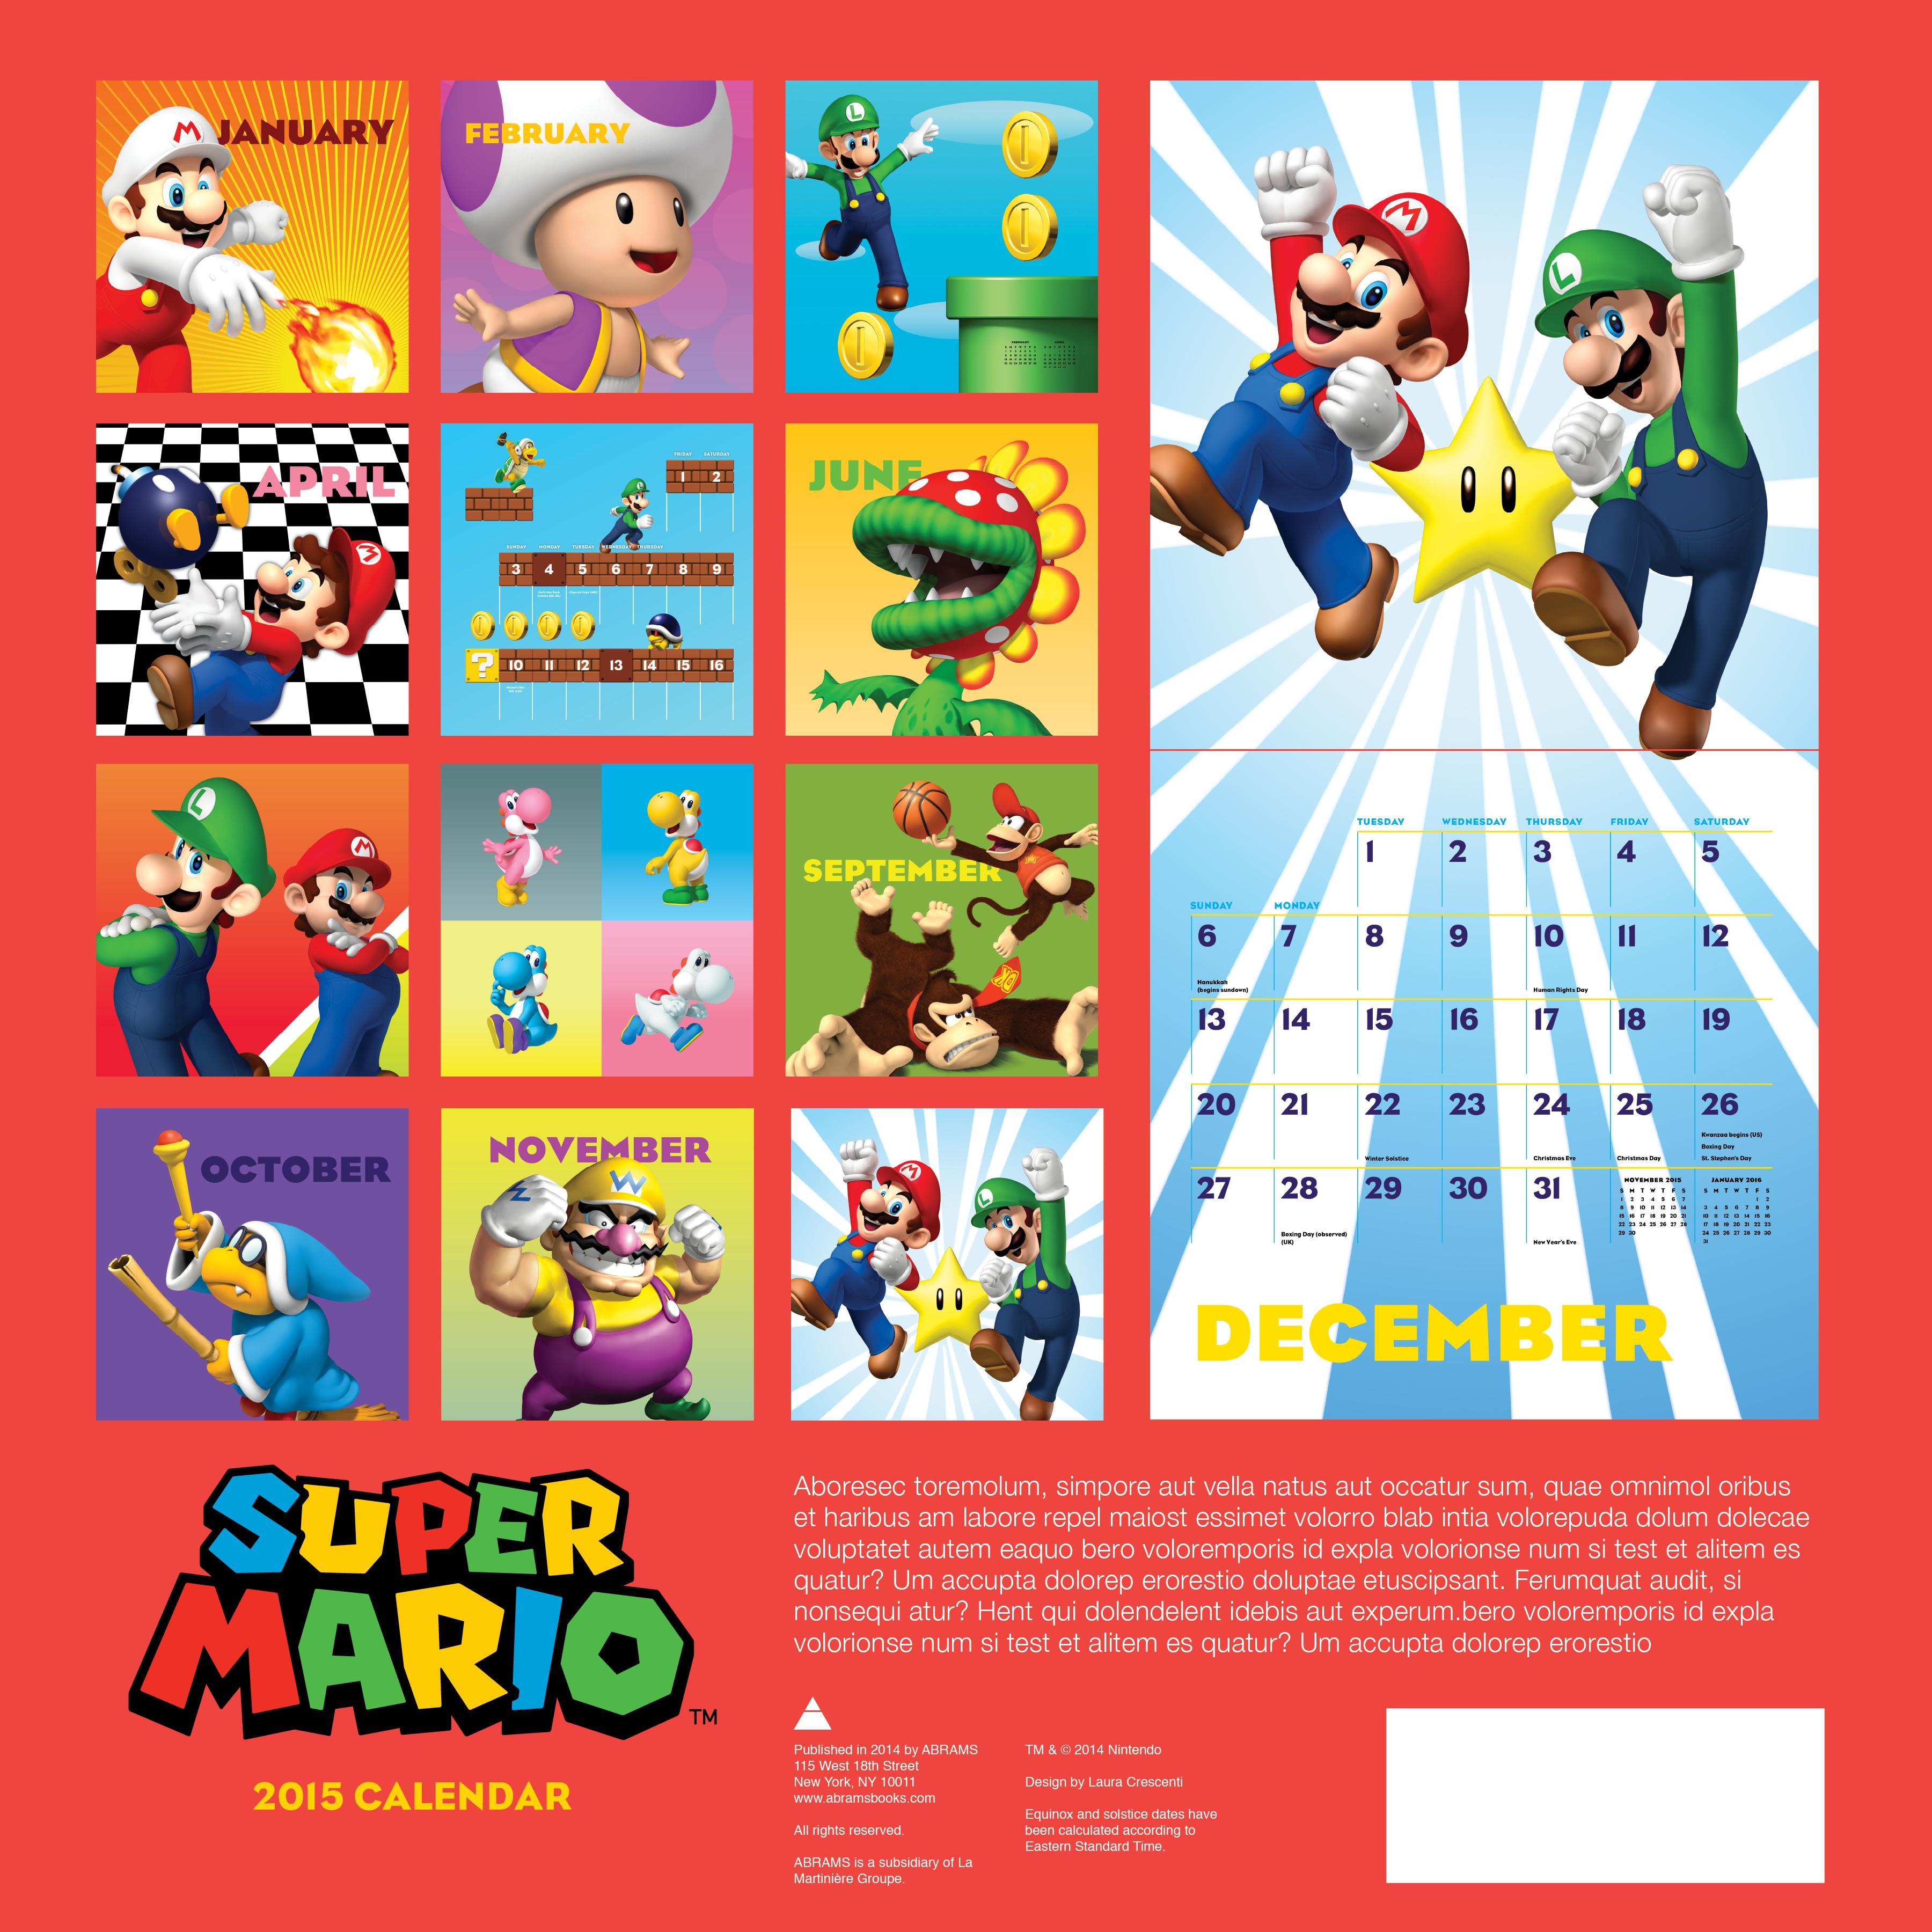 Fan Fiction Competition Write A Super Mario Story To Win A 2015 Super Mario Calendar